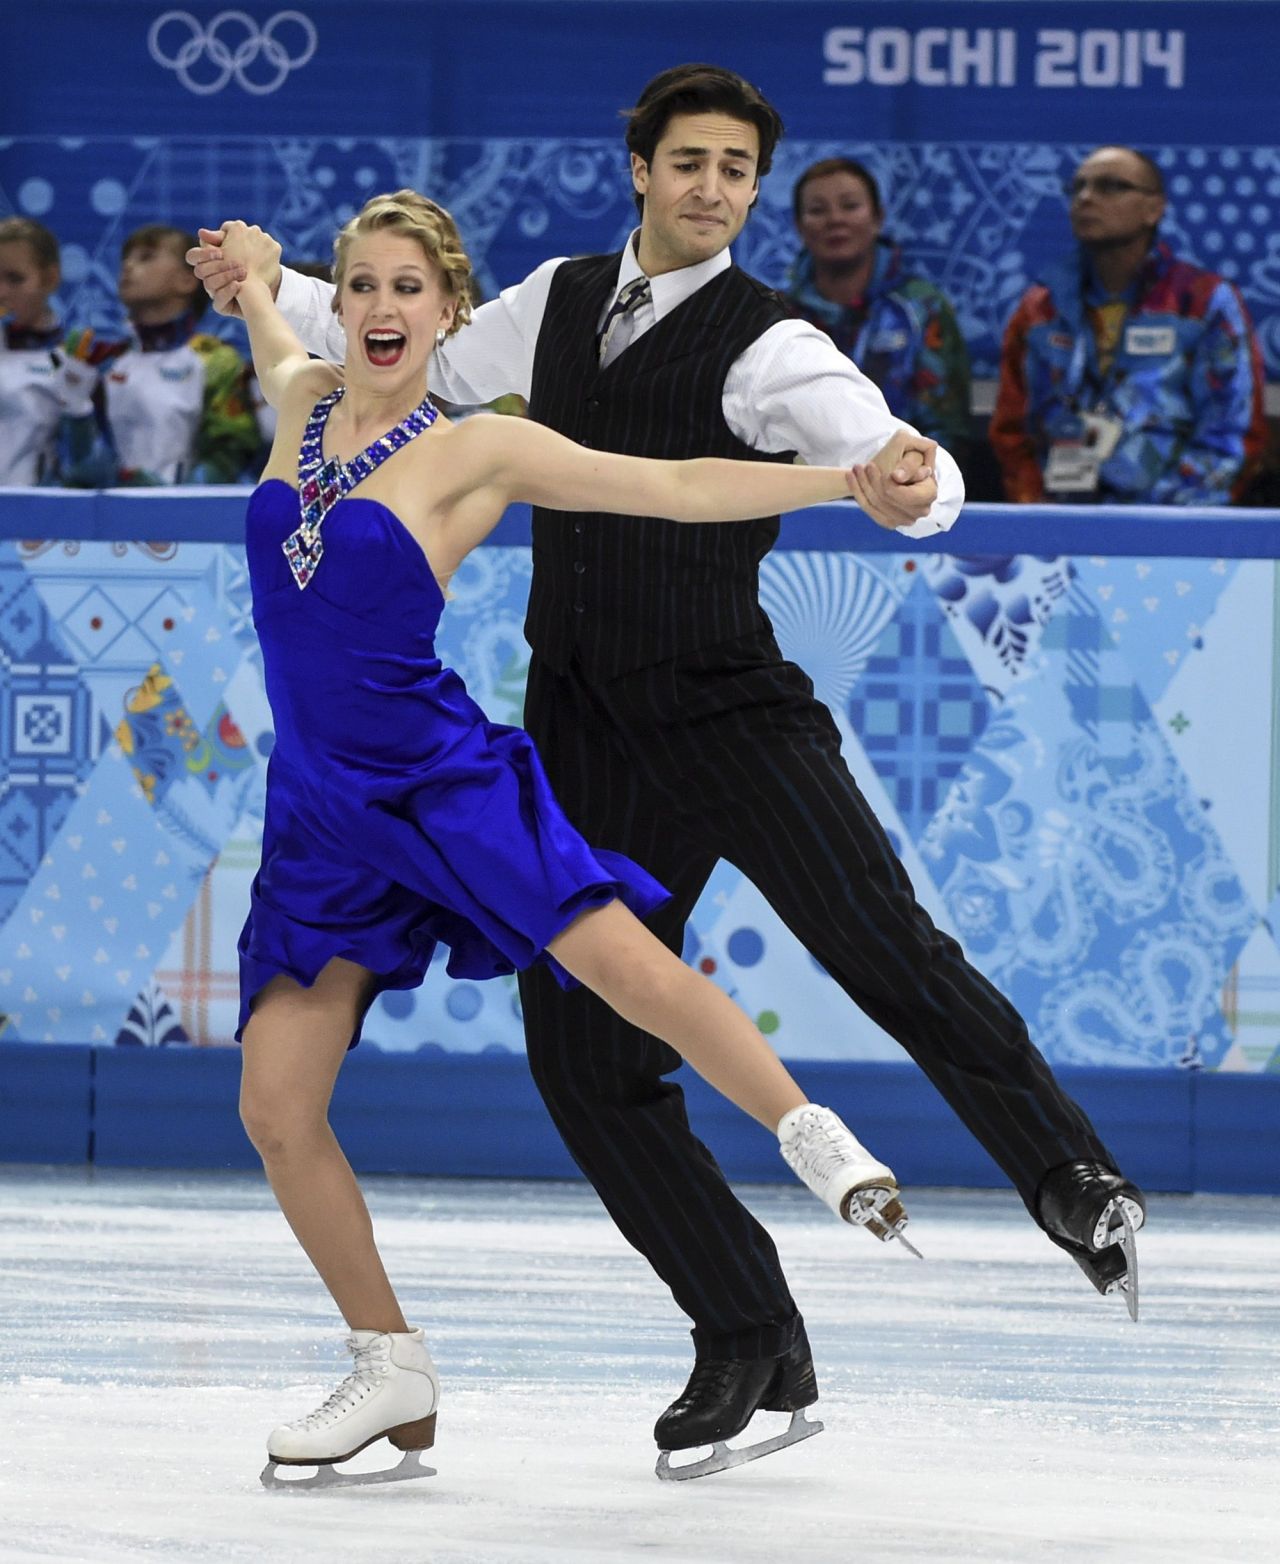 Kaitlyn Weaver - 2014 Sochi Winter Olympics, February 16, 2014